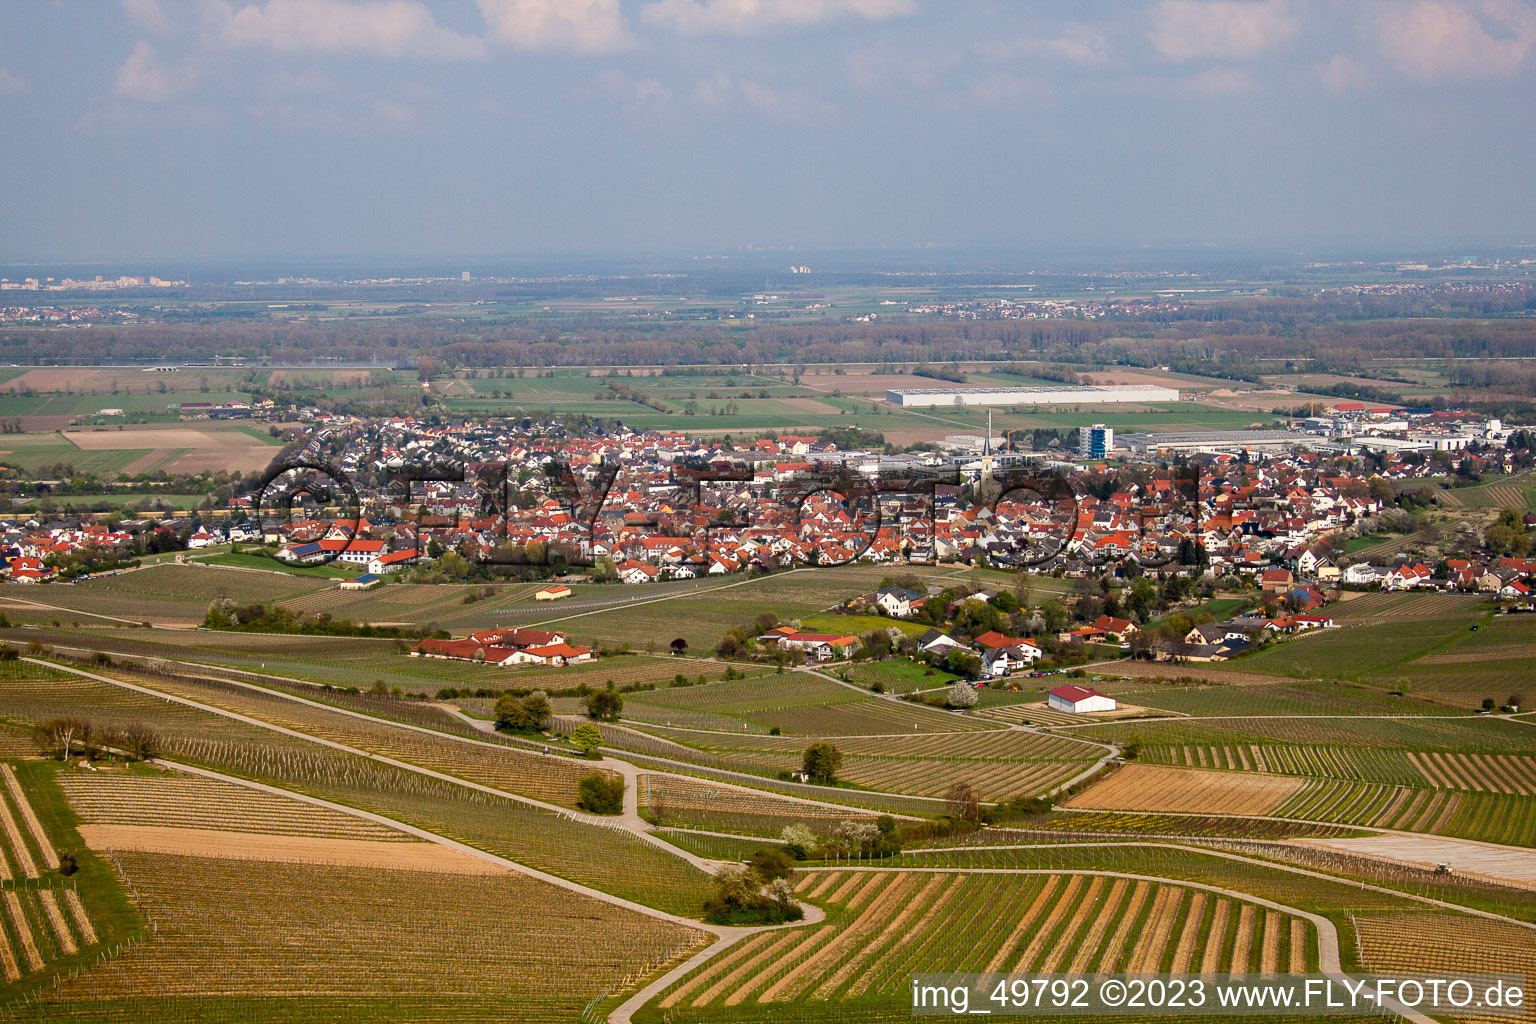 Mainz-Bodenheim in Bodenheim in the state Rhineland-Palatinate, Germany